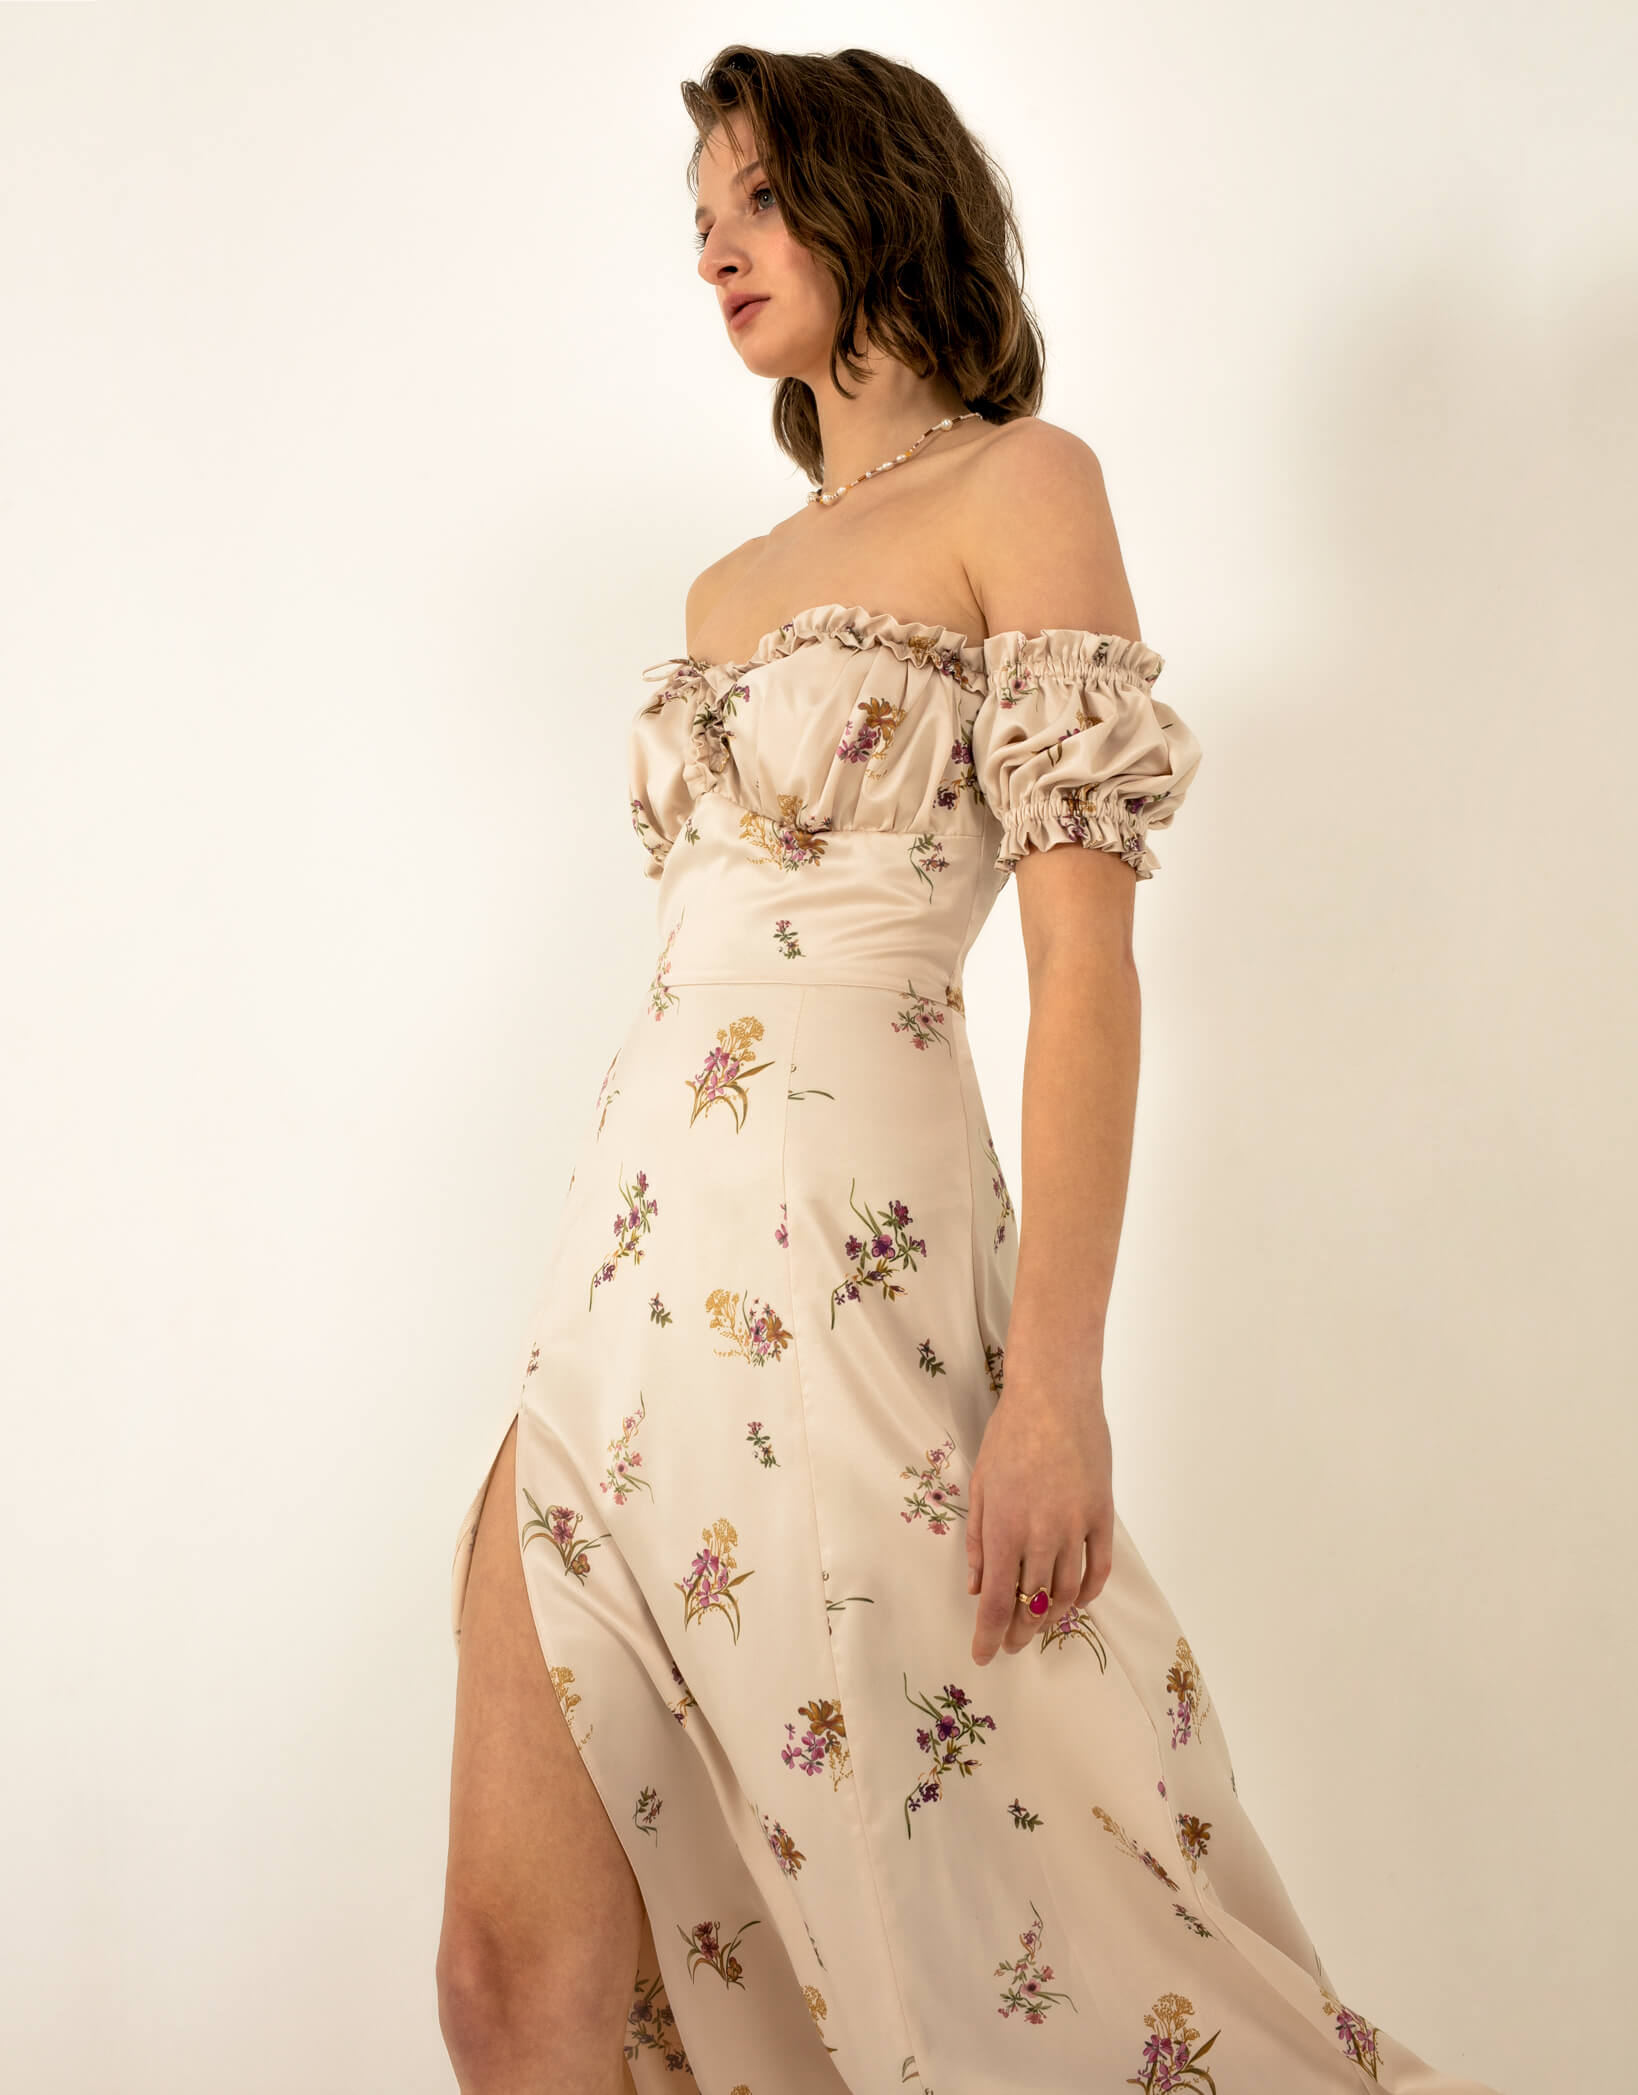 Model in Muse dress